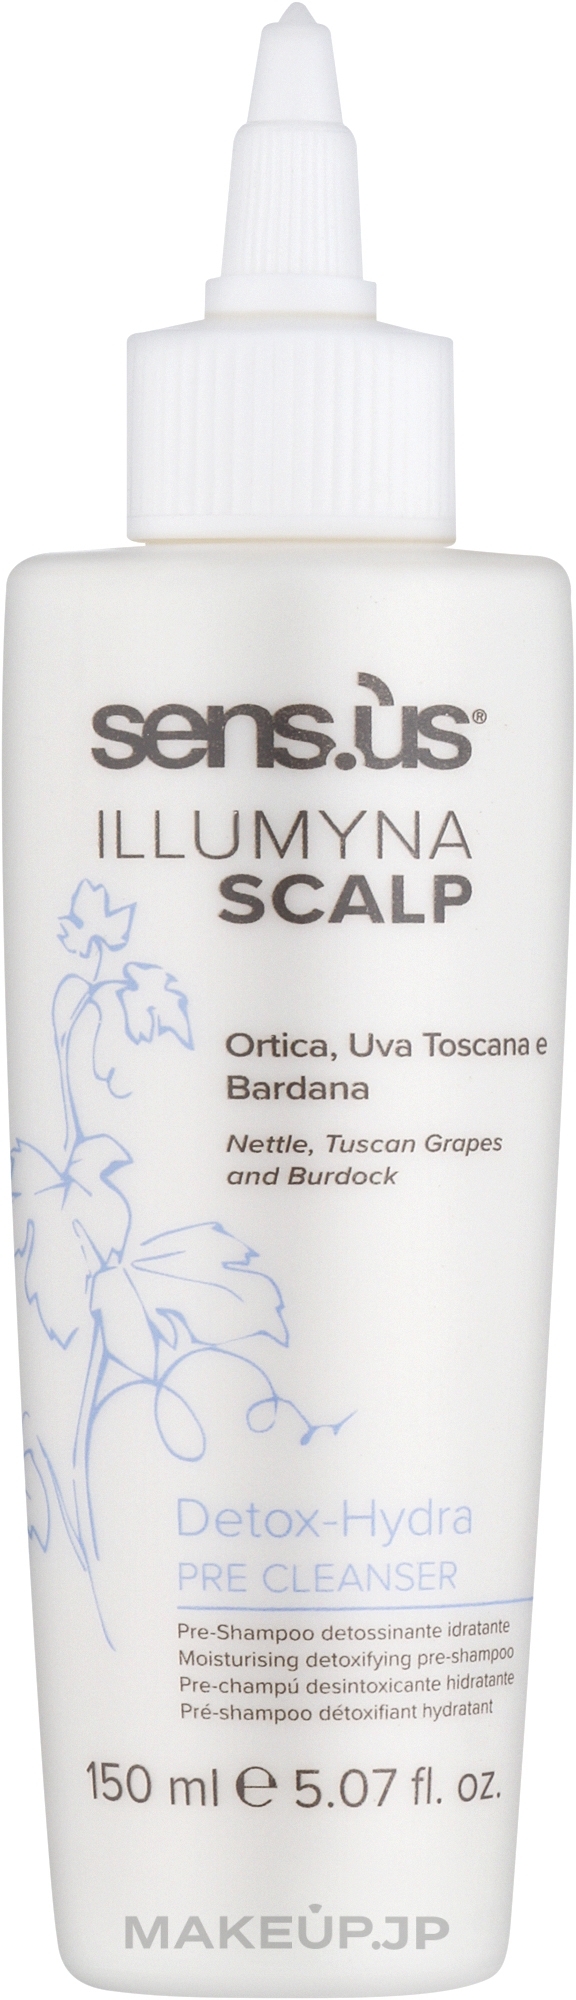 Detoxifying Moisturizing Shampoo - Sensus Illumyna Scalp Detox-Hydra Pre Cleanser — photo 150 ml